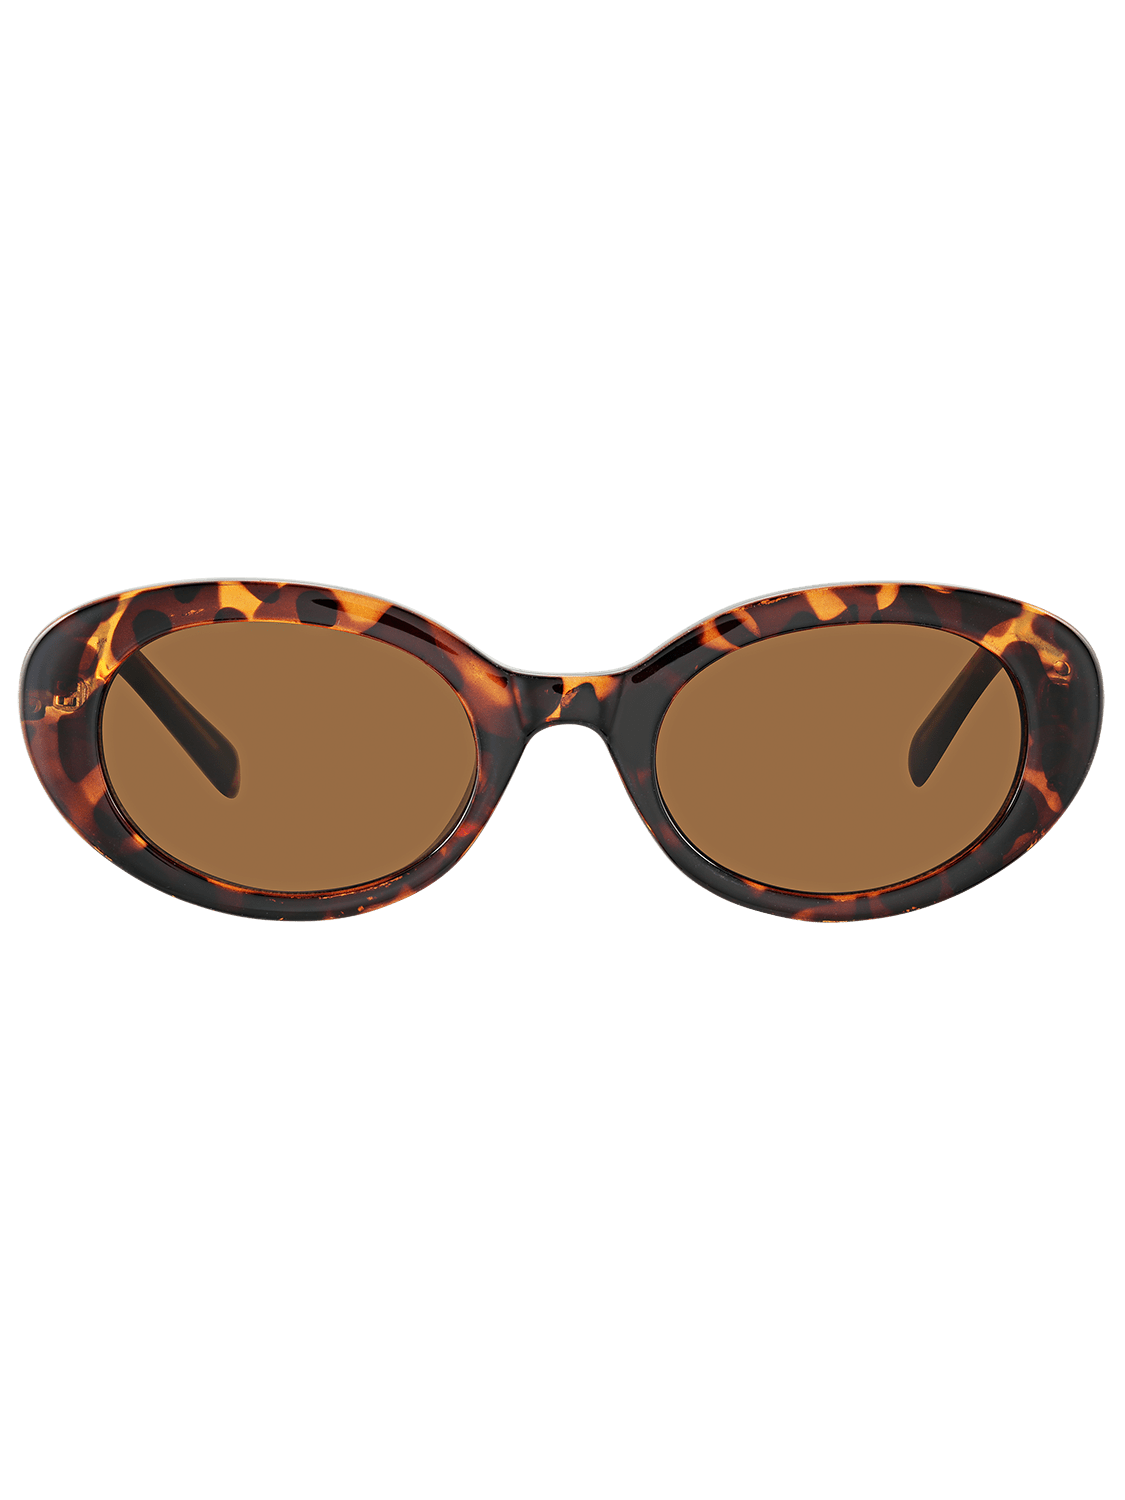 Tortoiseshell sunglasses from Bixby and Co